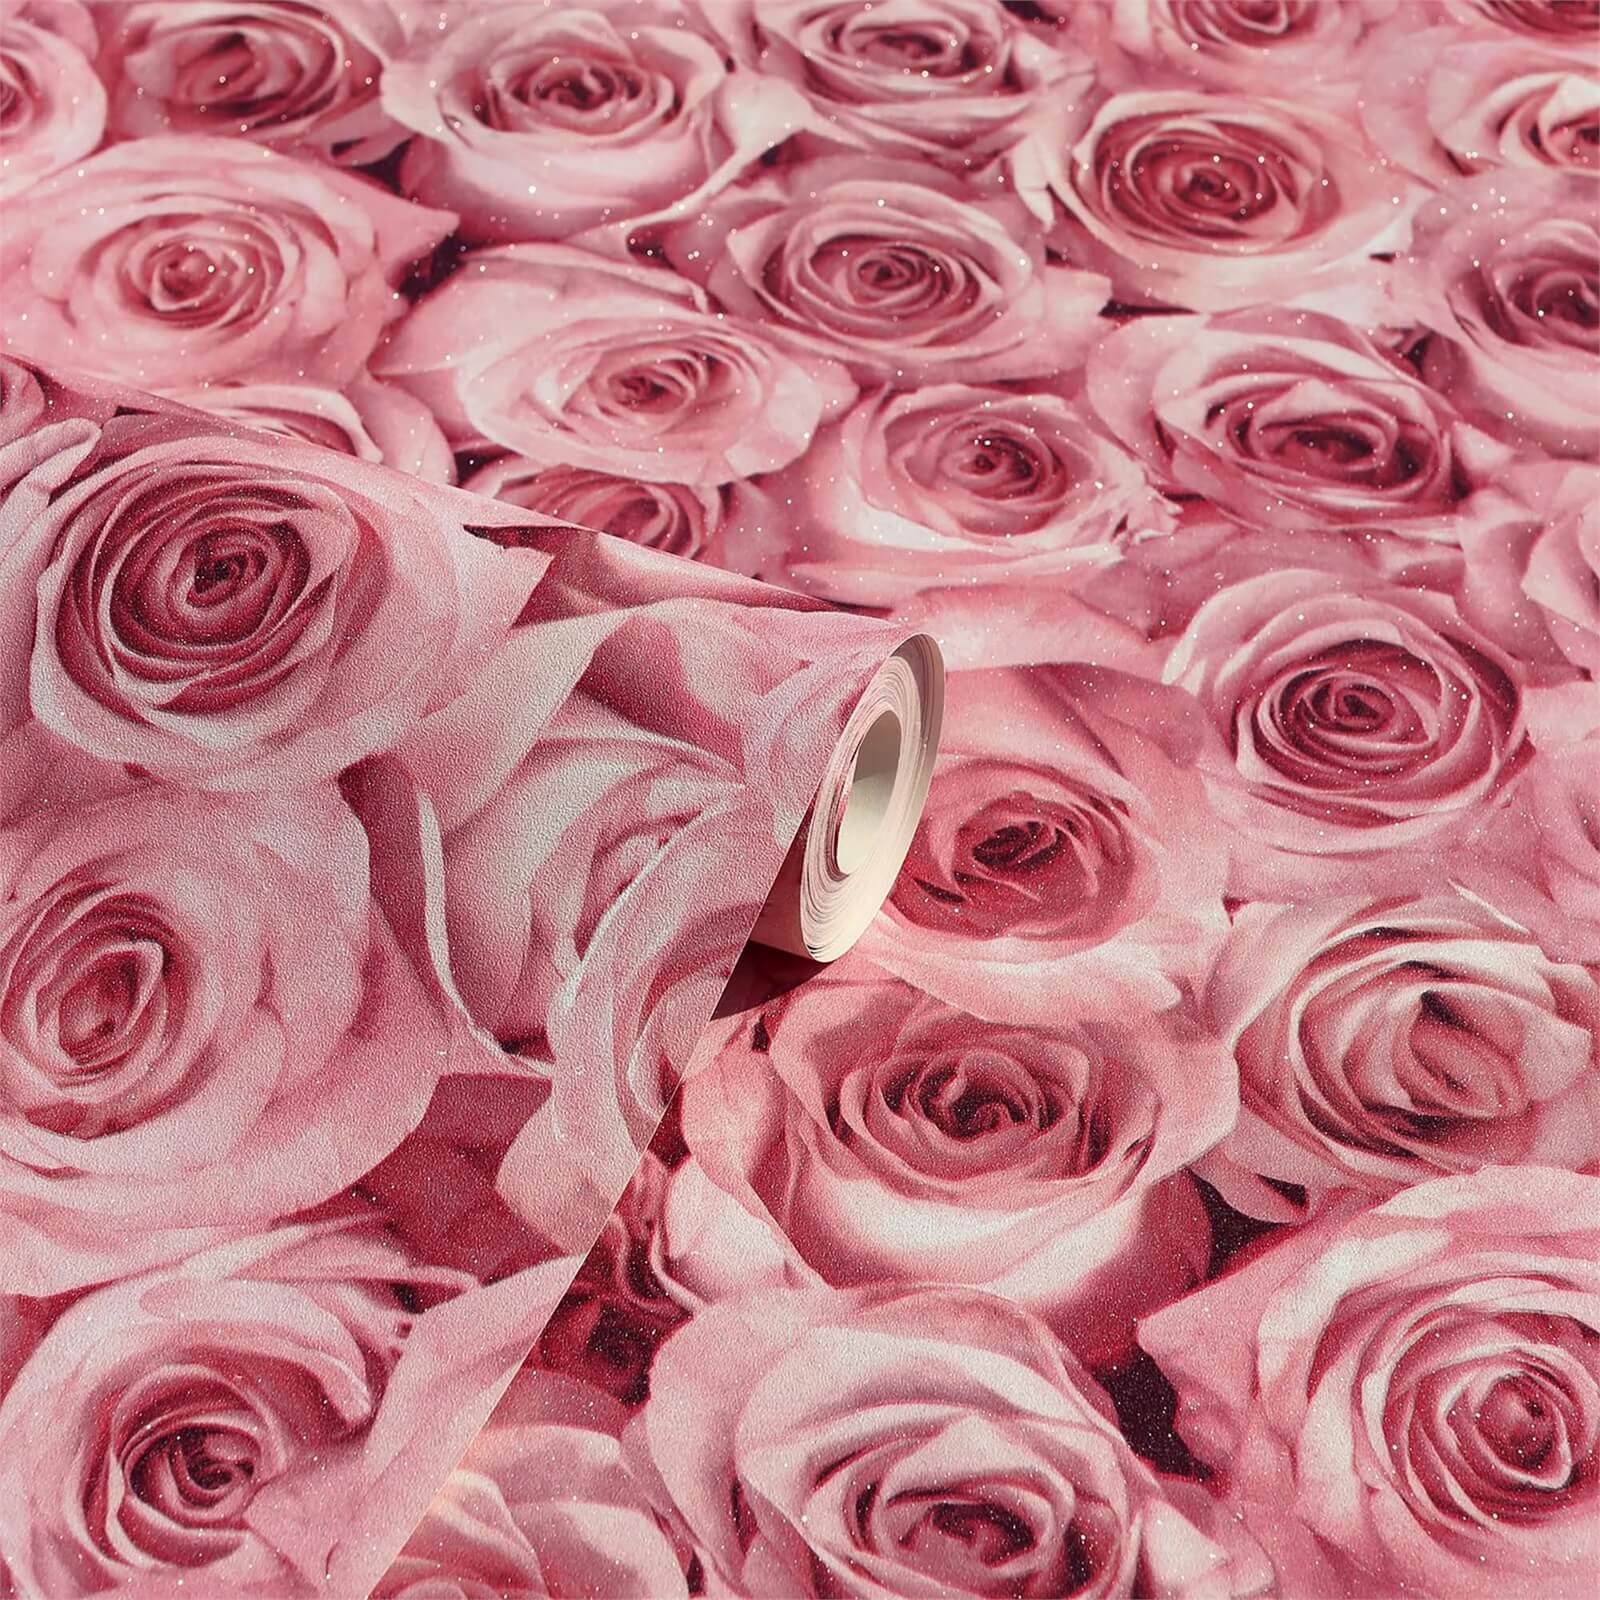 Arthouse Rose Wall Raspberry Wallpaper